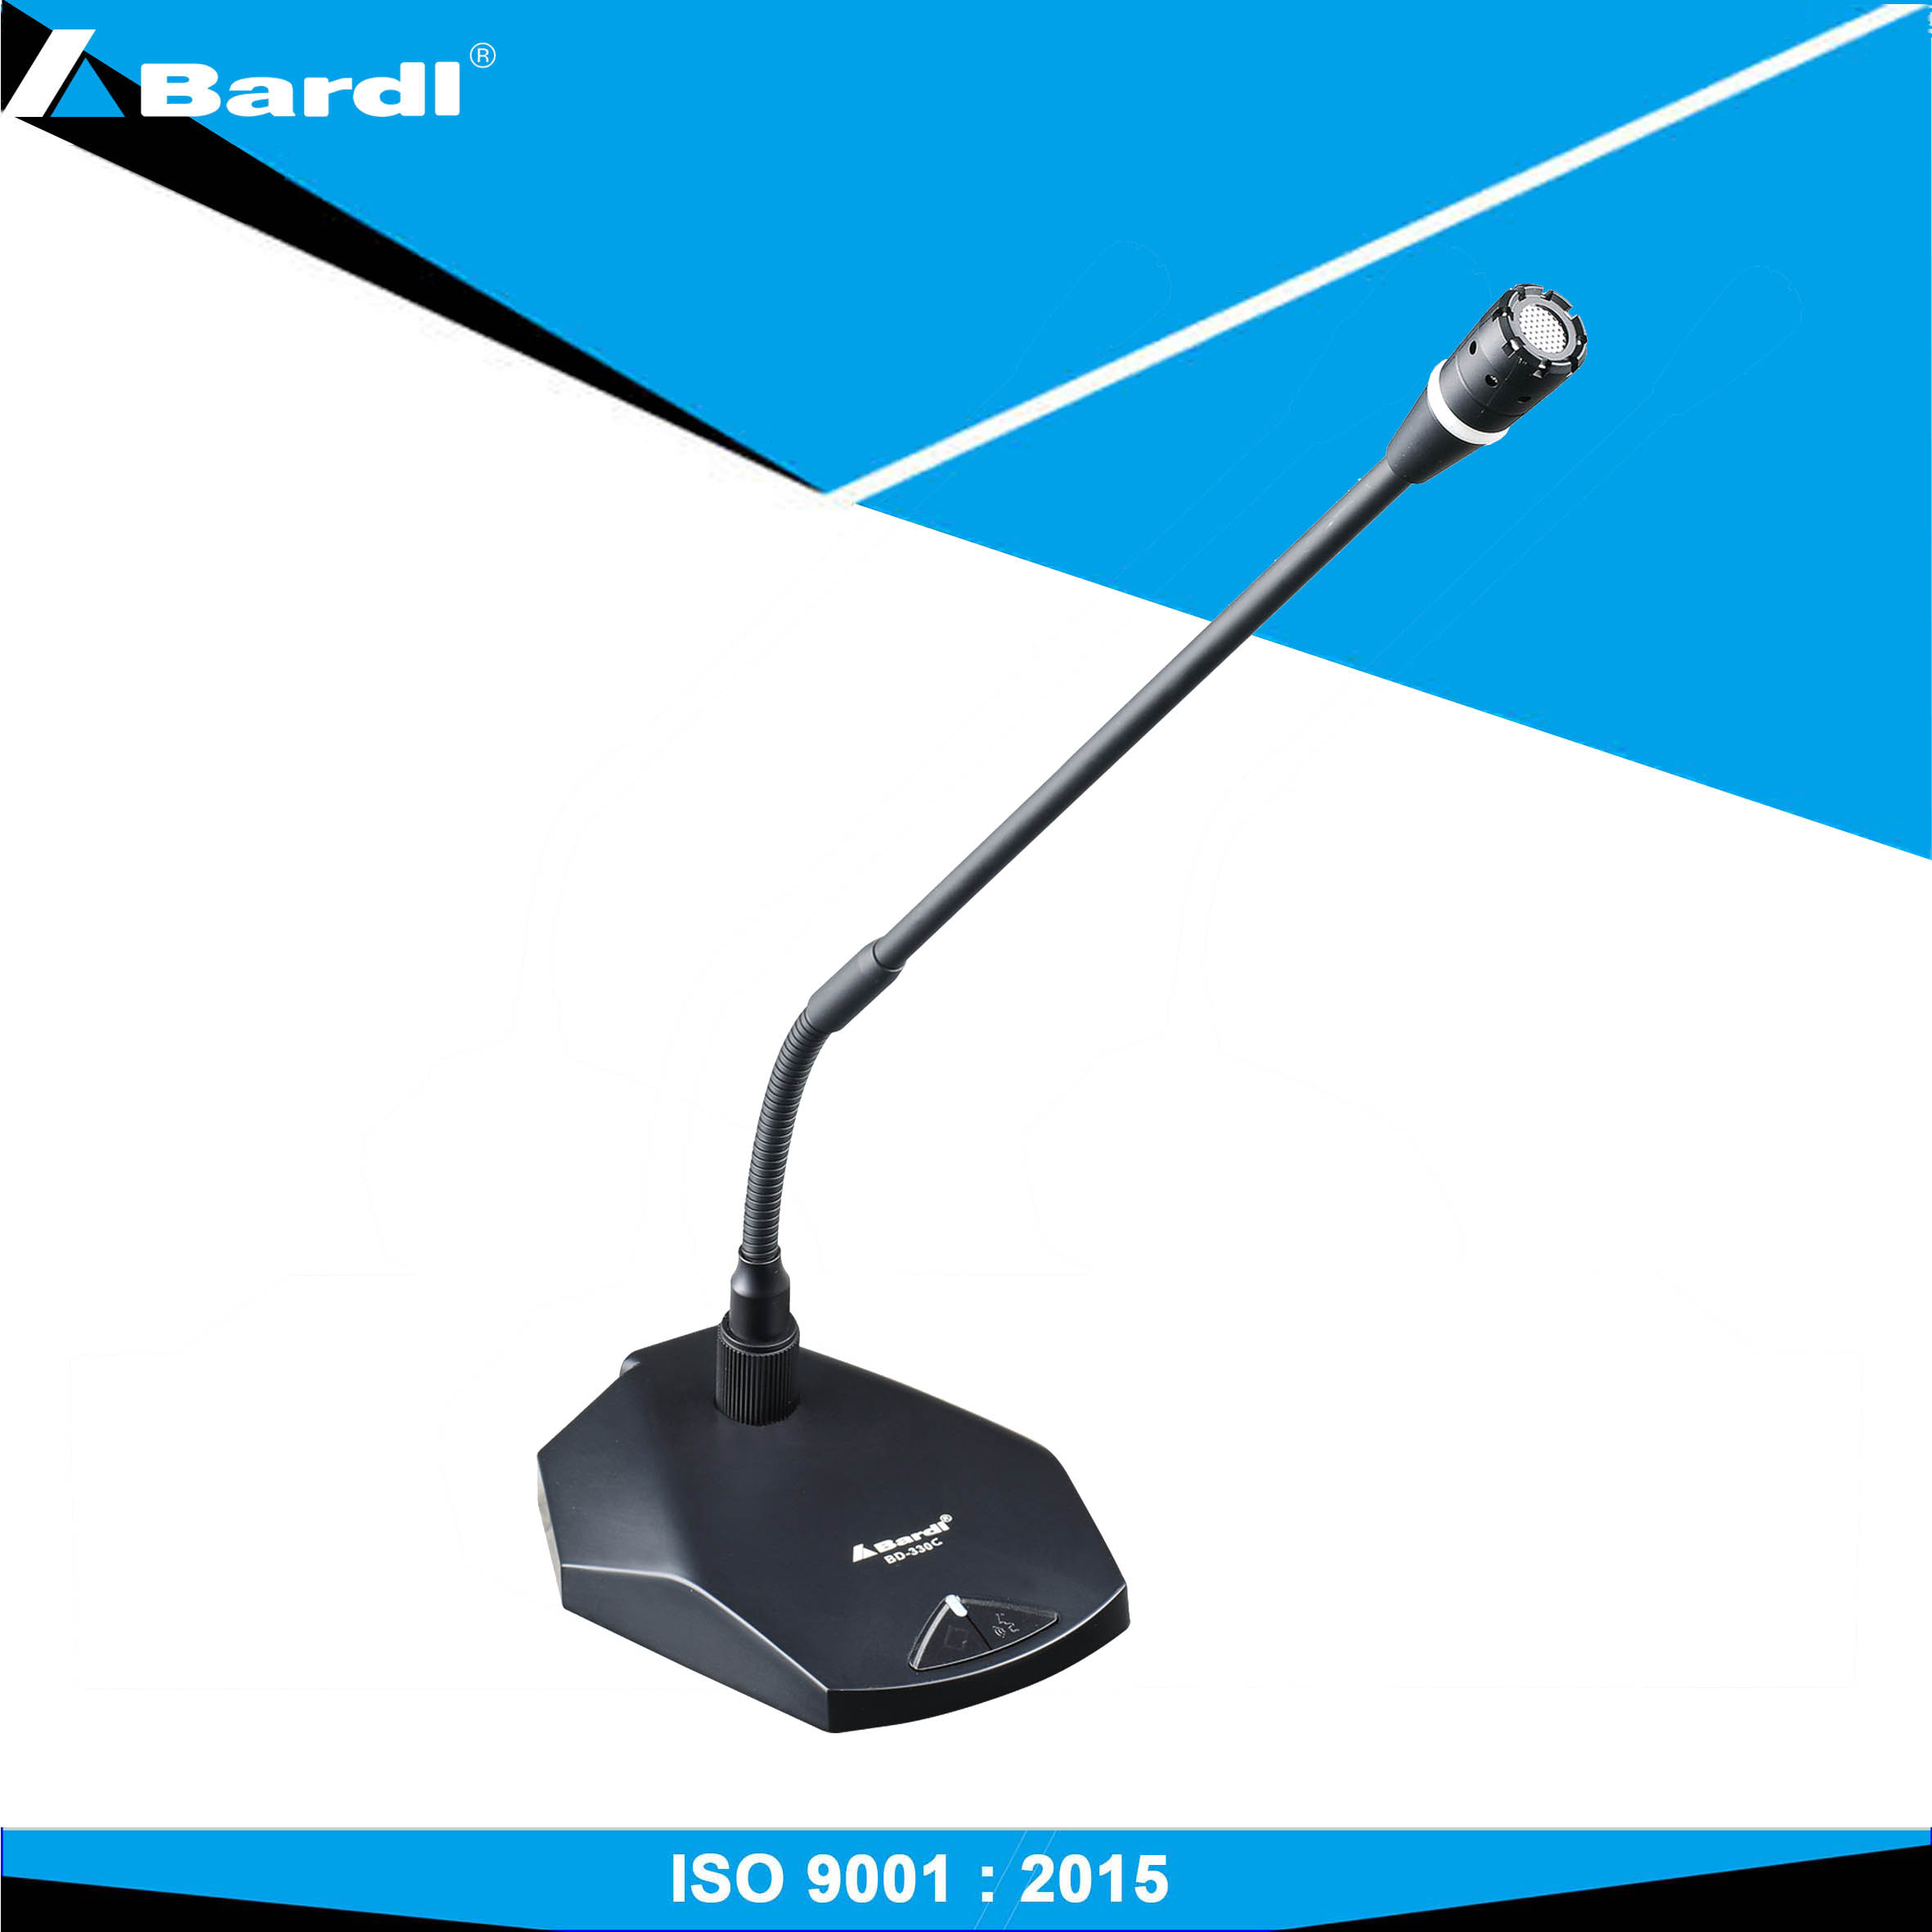 Bardl conference system BD-330 